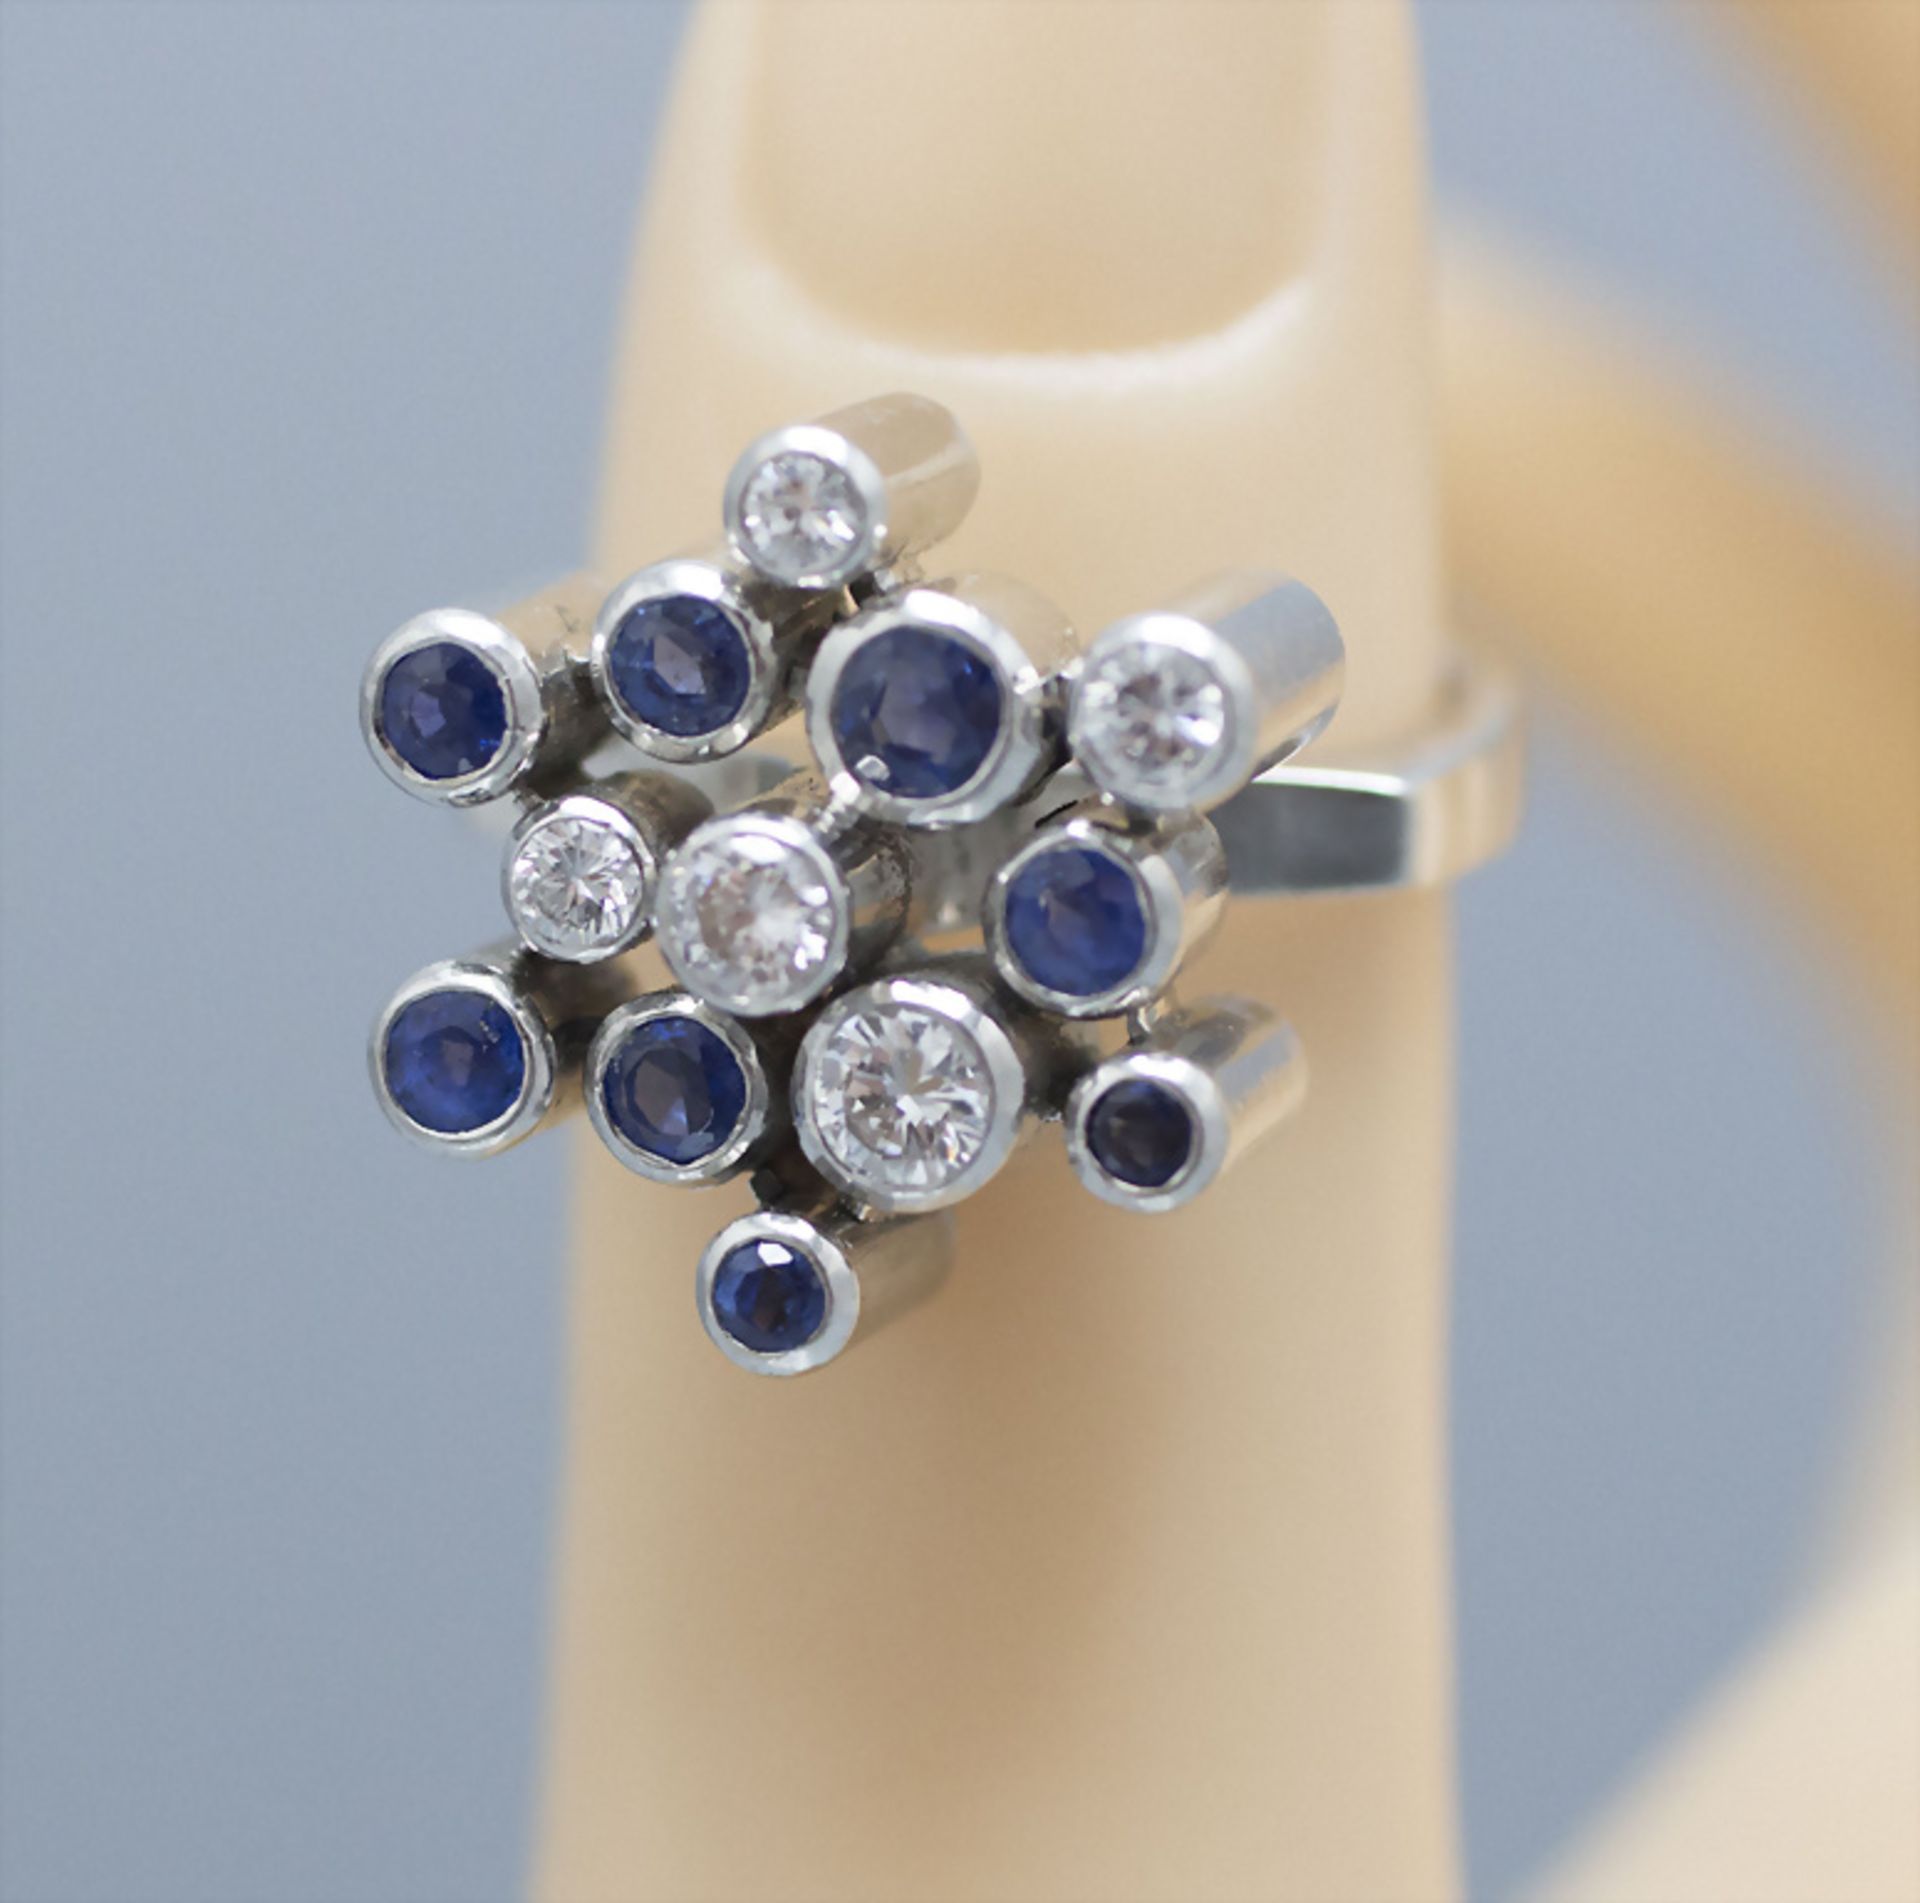 Damenring mit Saphiren und Brillanten / A ladies 18 ct white gold ring with sapphires and diamonds - Image 2 of 4